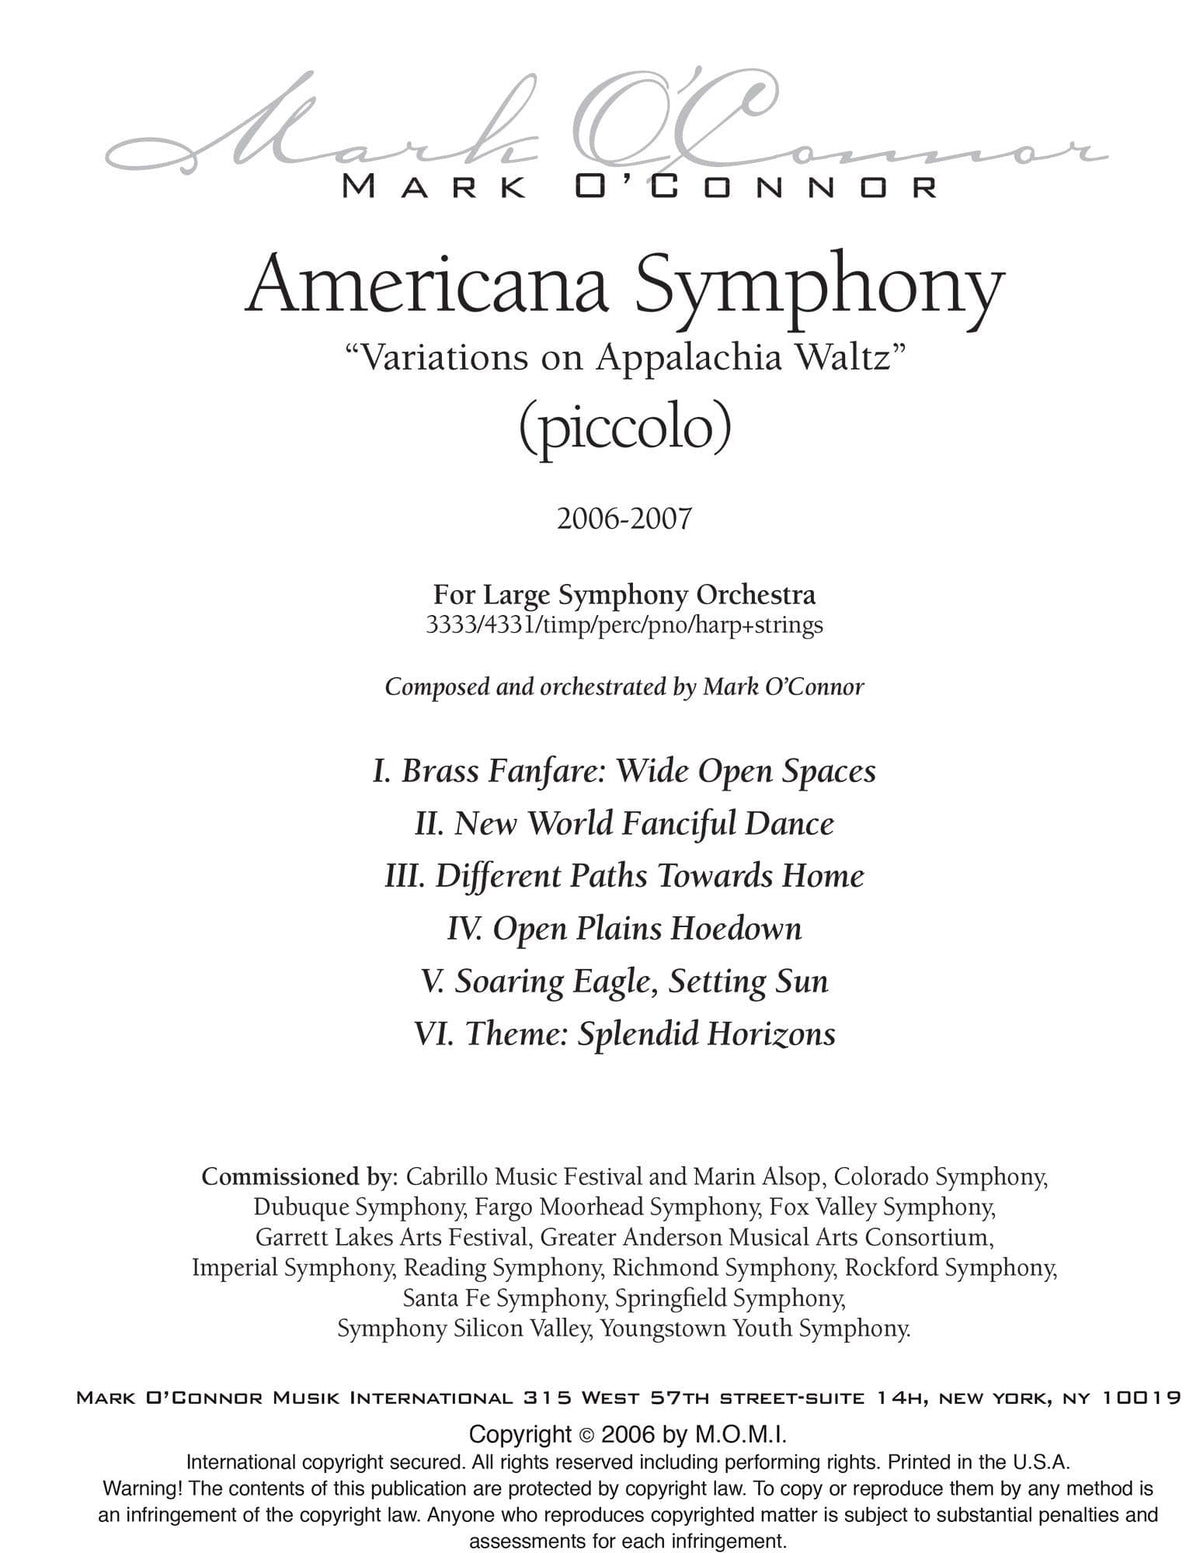 O'Connor, Mark - Americana Symphony "Variations on Appalachia Waltz" - Wind Parts - Digital Download